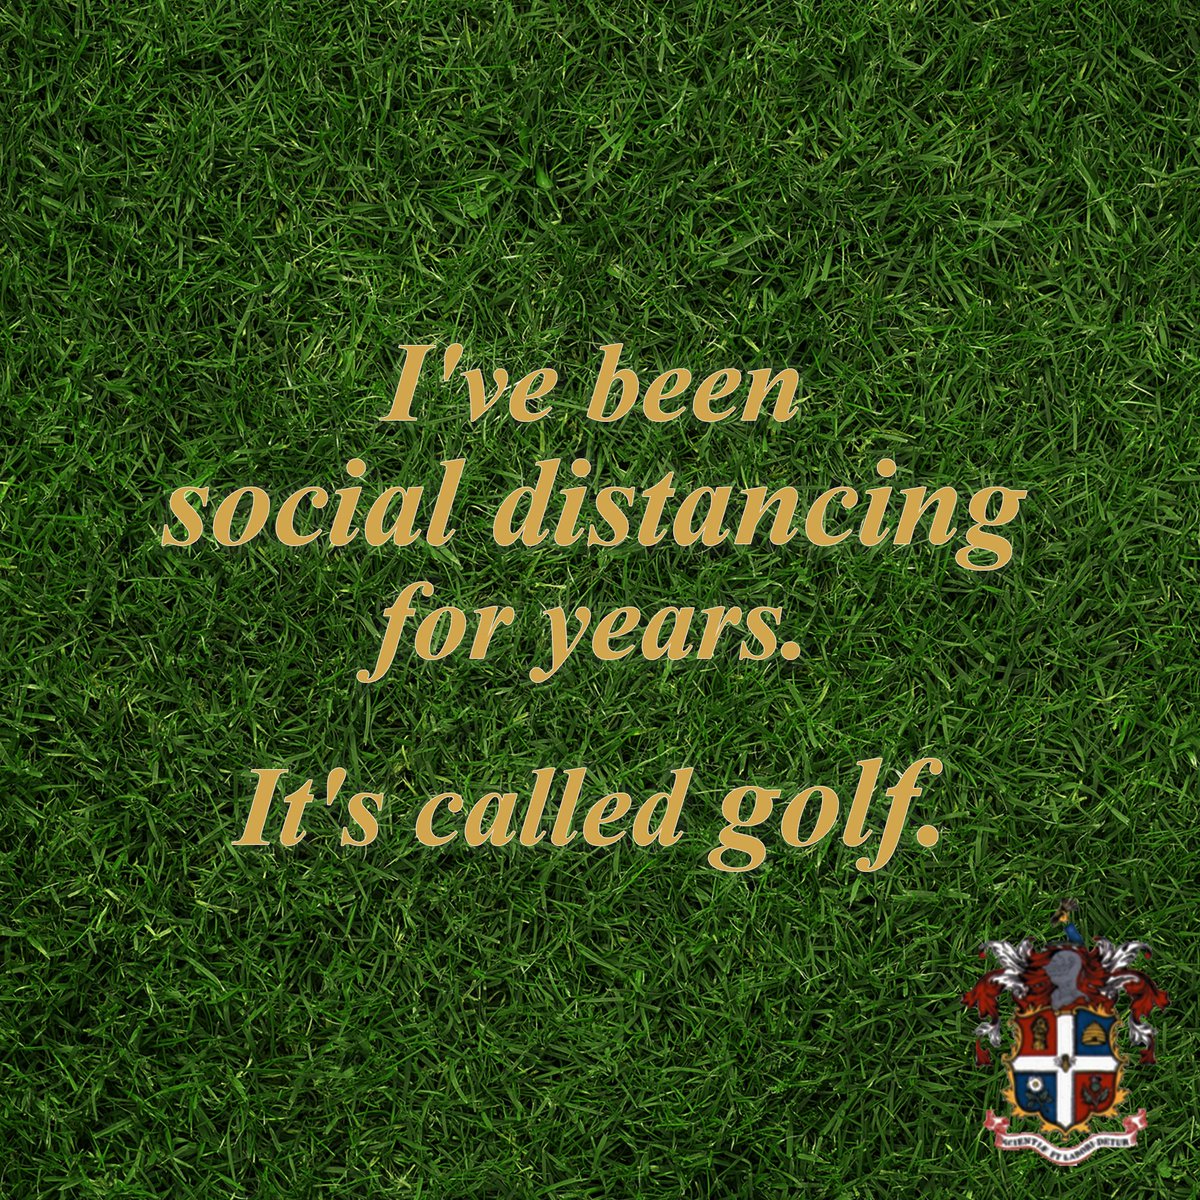 #golf #golfcourse #golflife #golfmemes #golfjokes #bedfordshire #southbeds